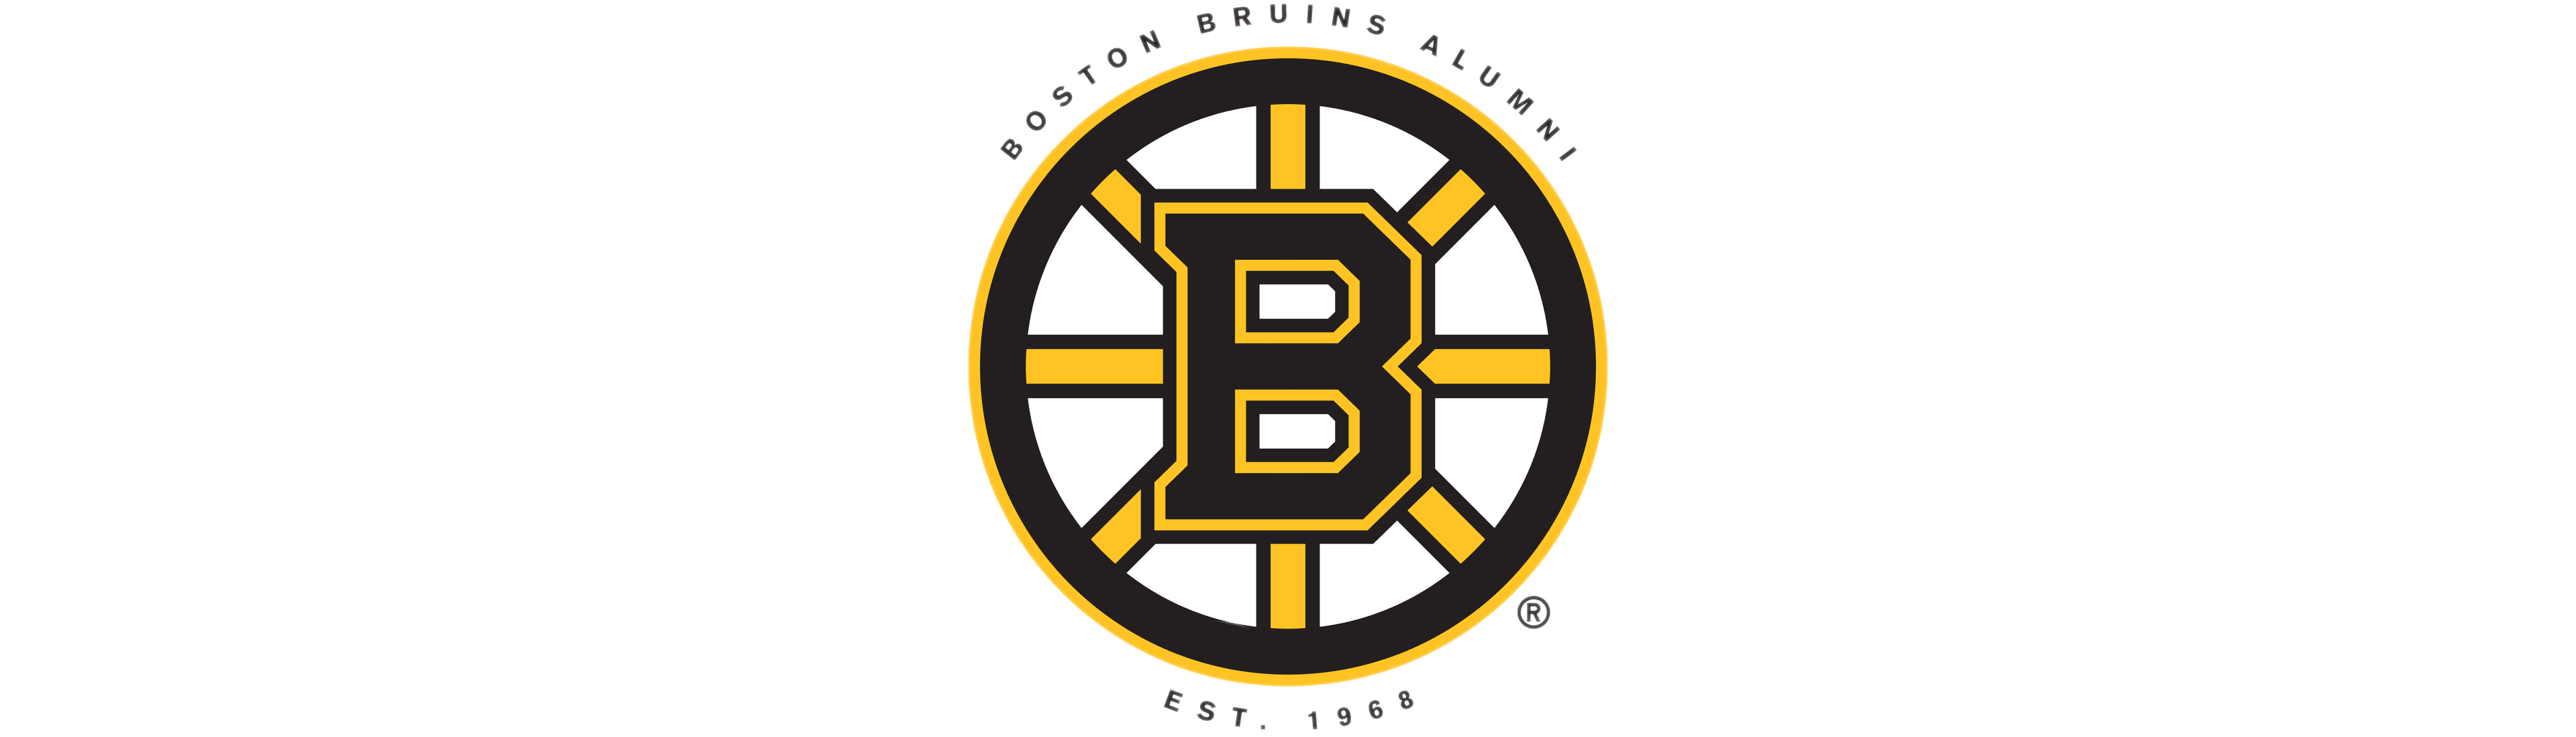 Boston Bruins Alumni vs. CRI Knights logo image